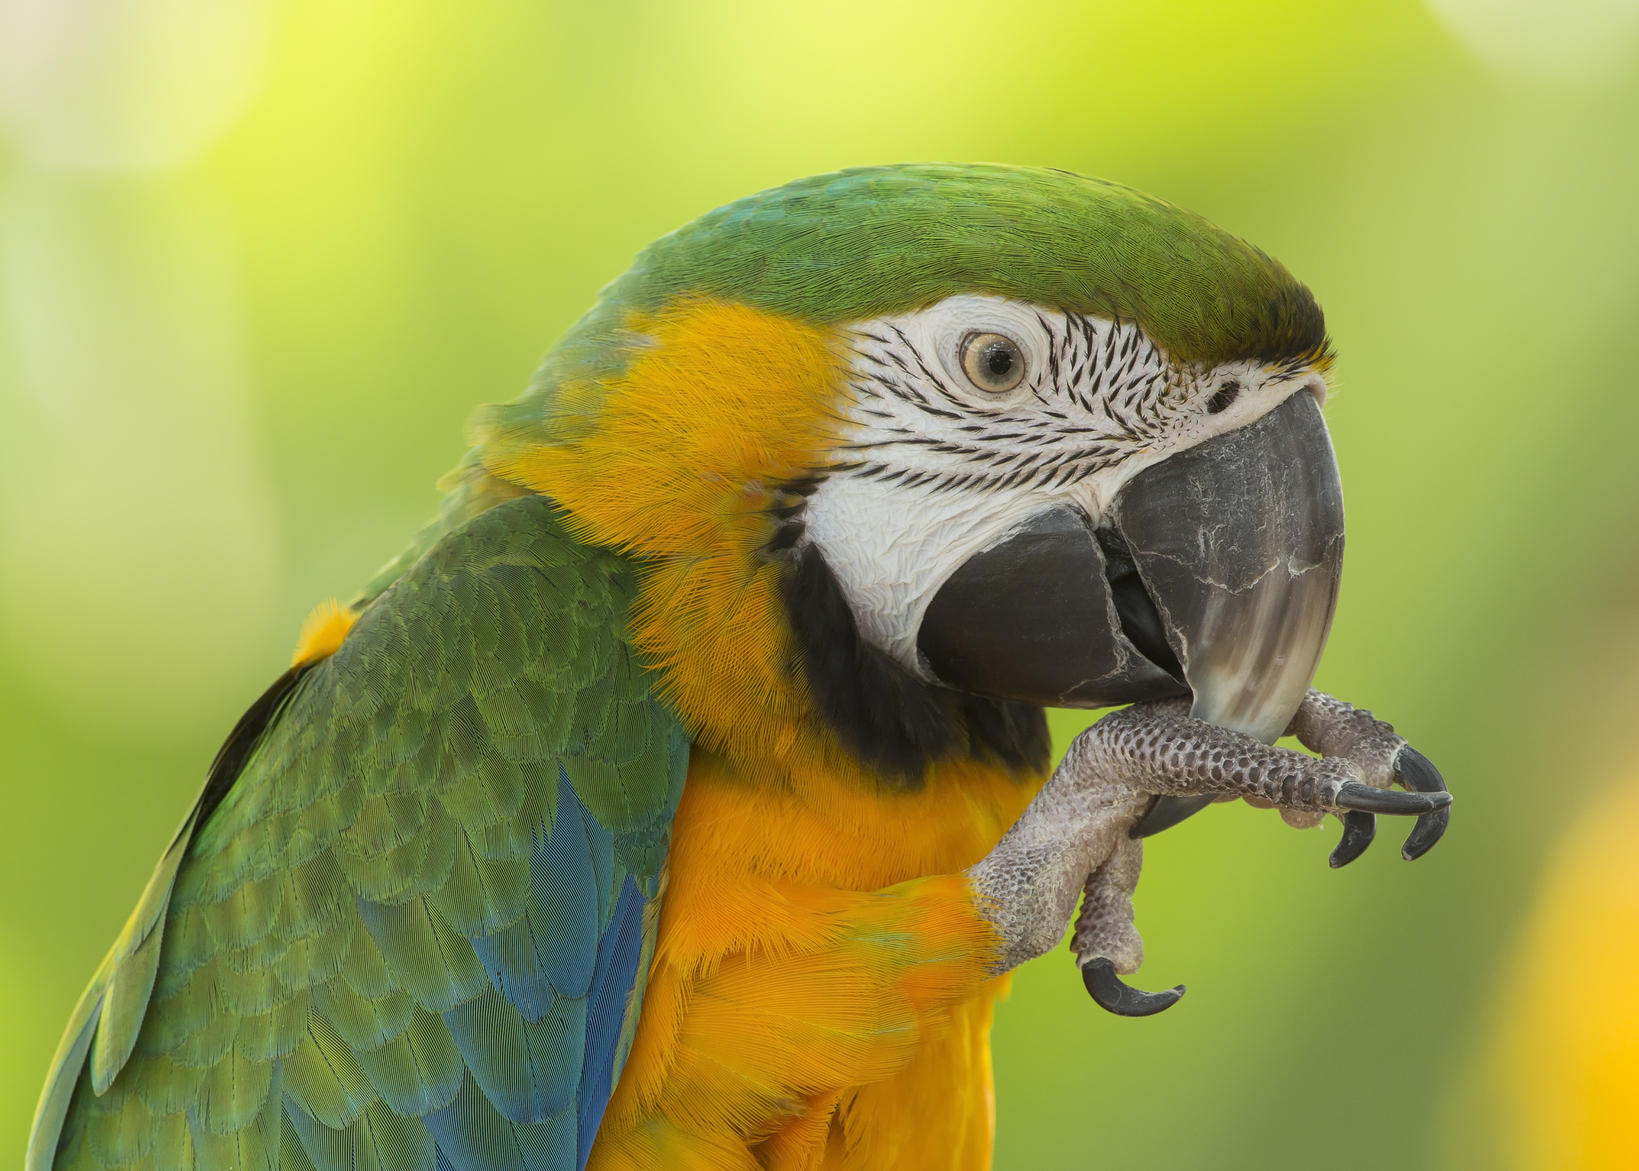 Man's pet birds gave him rare case of "parrot fever" - CBS News